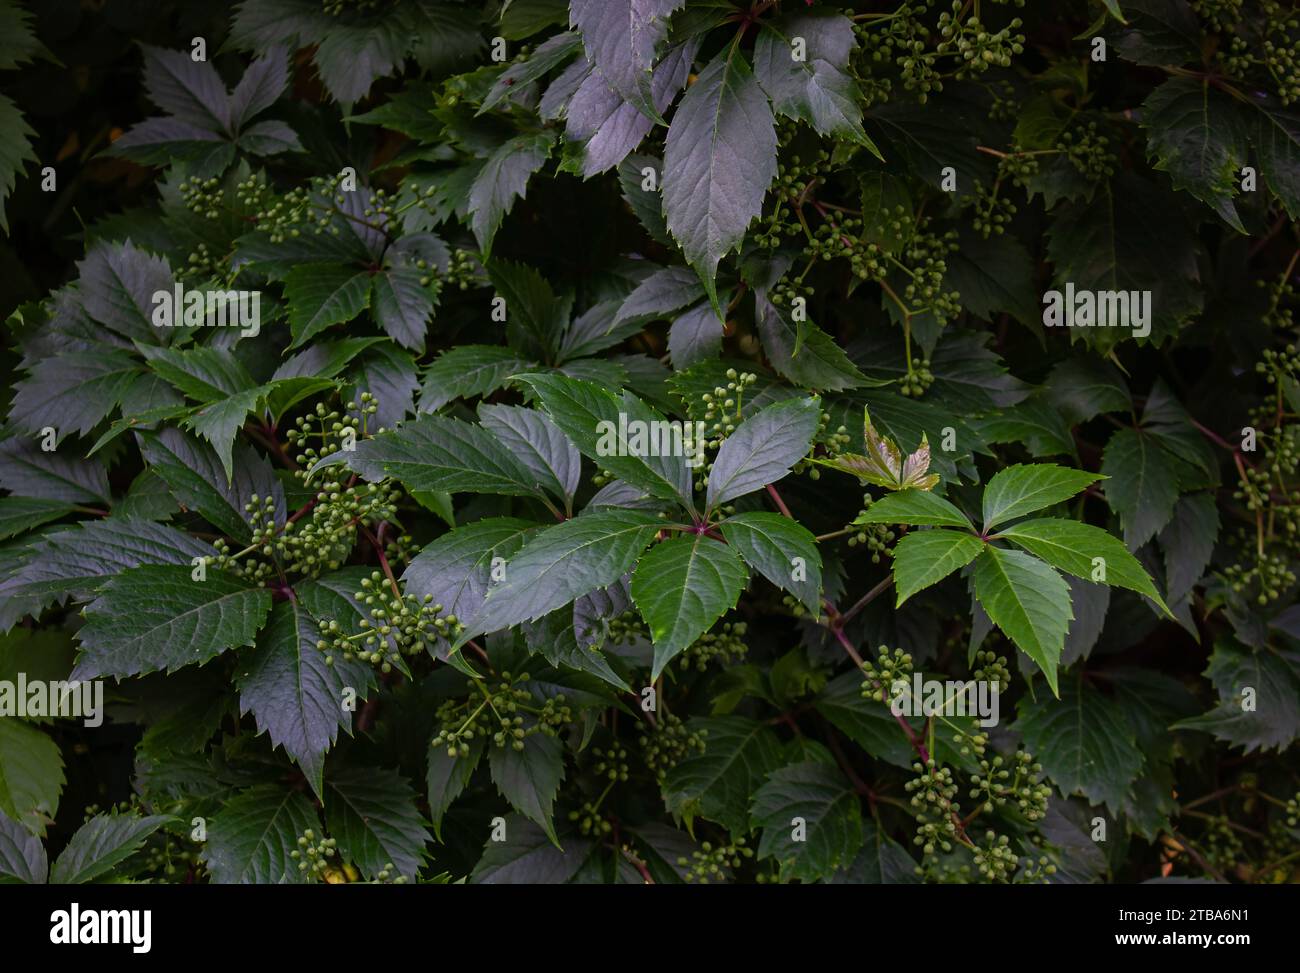 Green Virginia Creeper Parthenocissus quinquefolia var. Murorum in the garden background. Leafy green texture. Virginia creeper or five leaves ivy cli Stock Photo